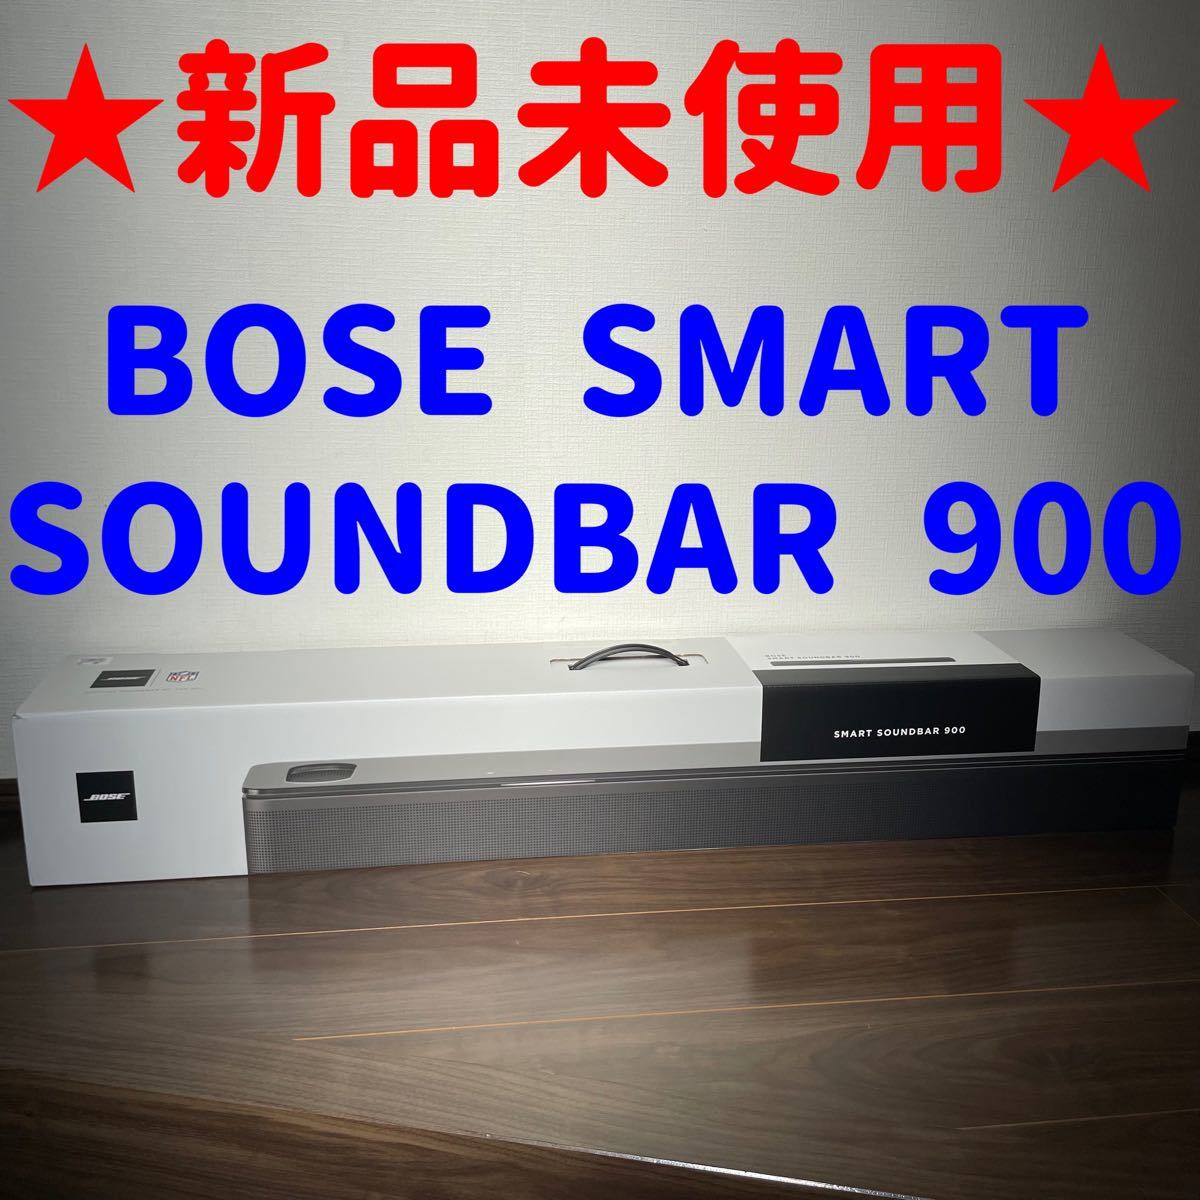 Bose Smart Soundbar 900 スマートサウンドバー | iins.org